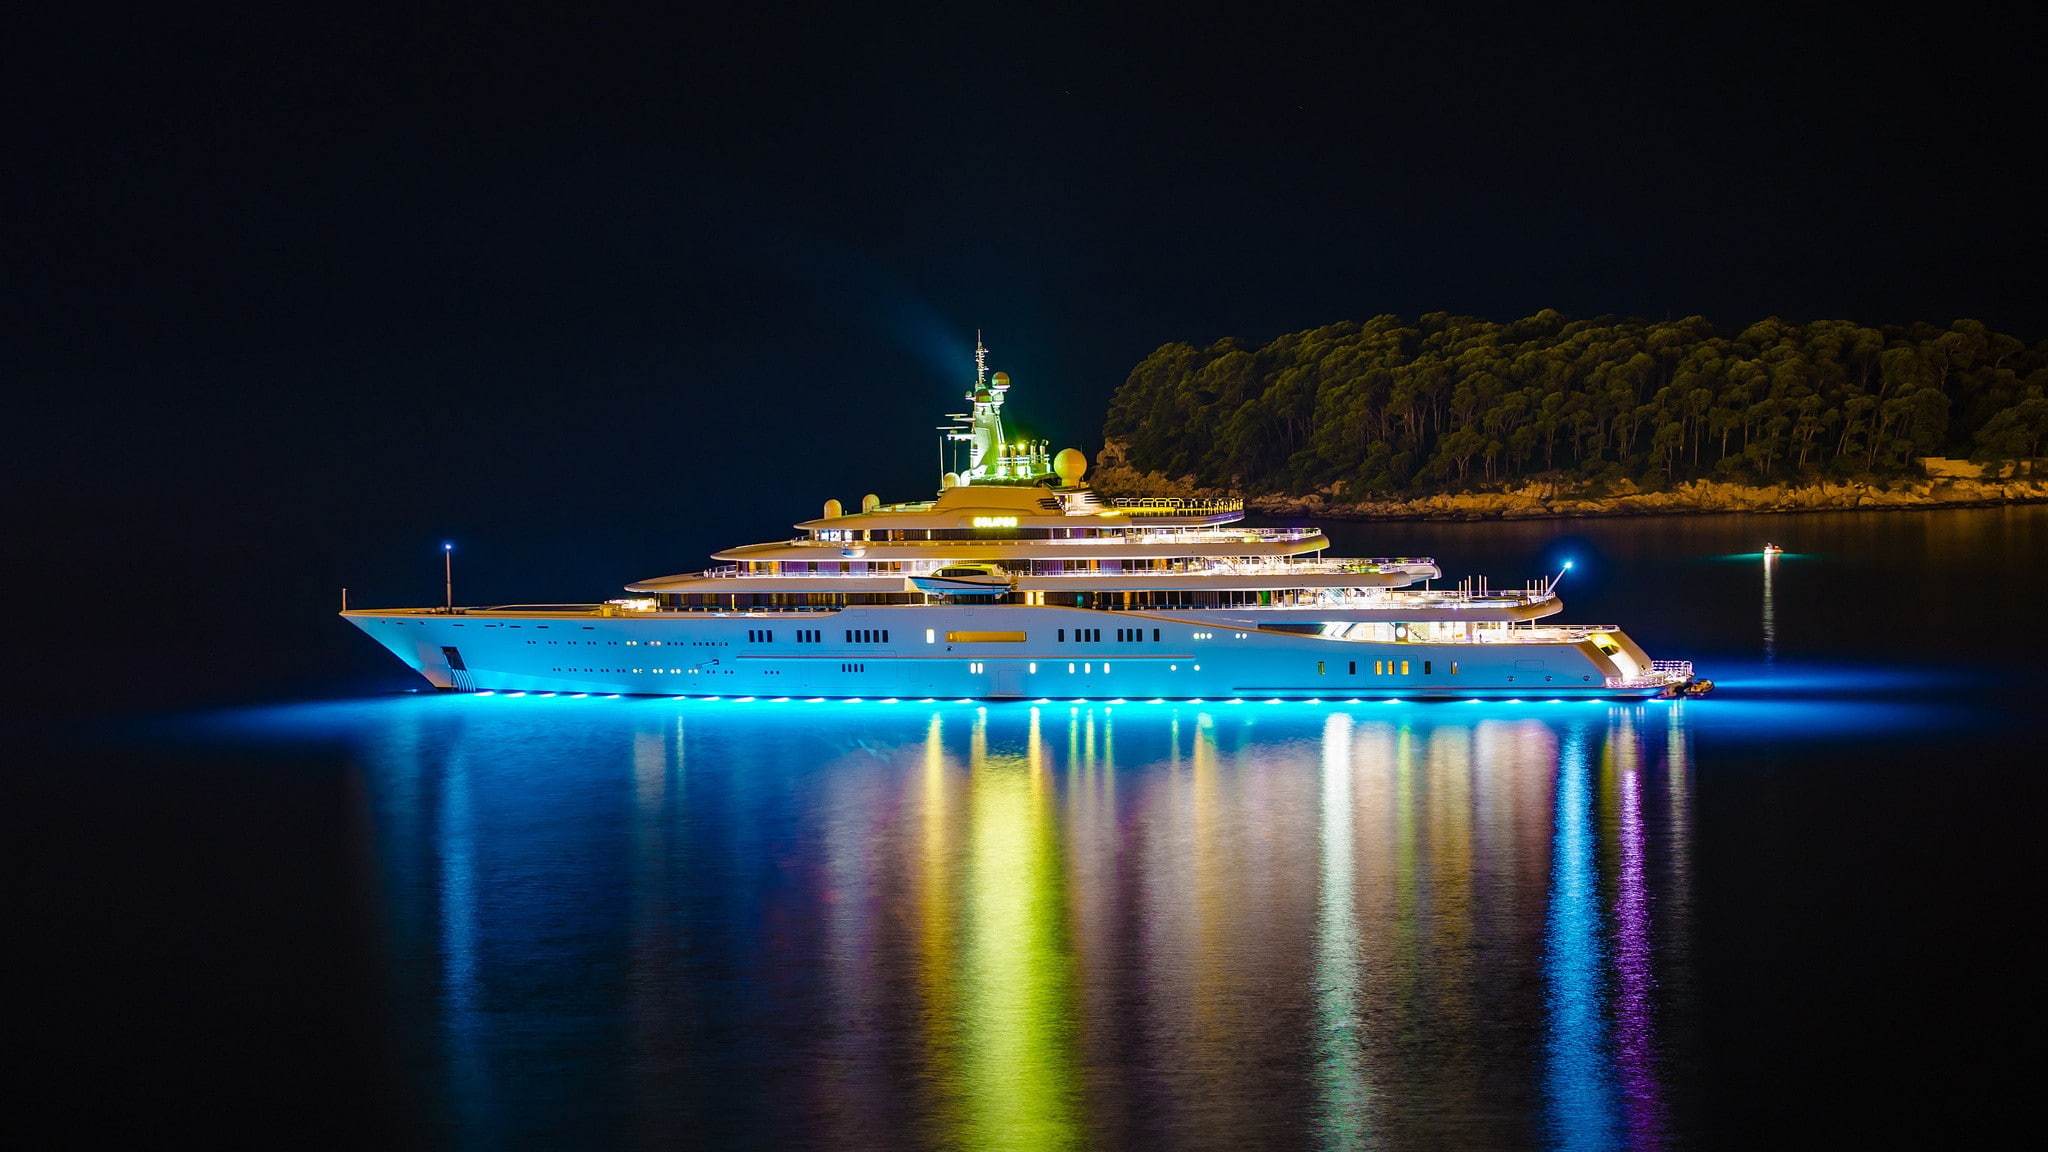 boat, night, lights, yachts, reflection, water, ship, trees